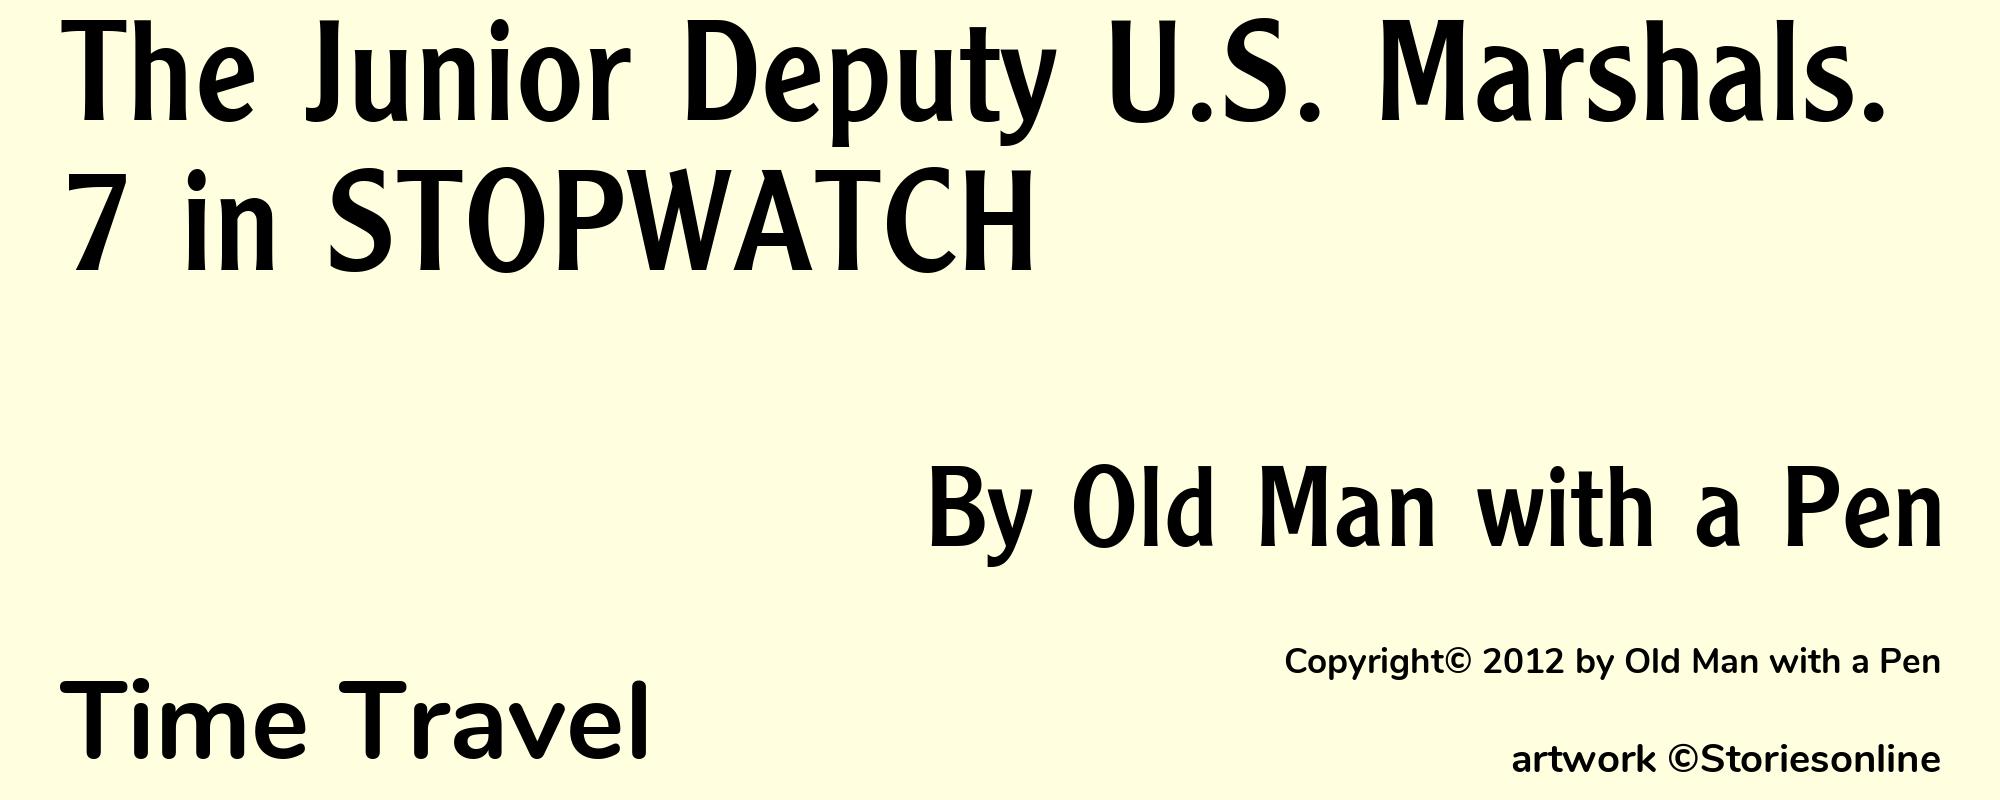 The Junior Deputy U.S. Marshals. 7 in STOPWATCH - Cover